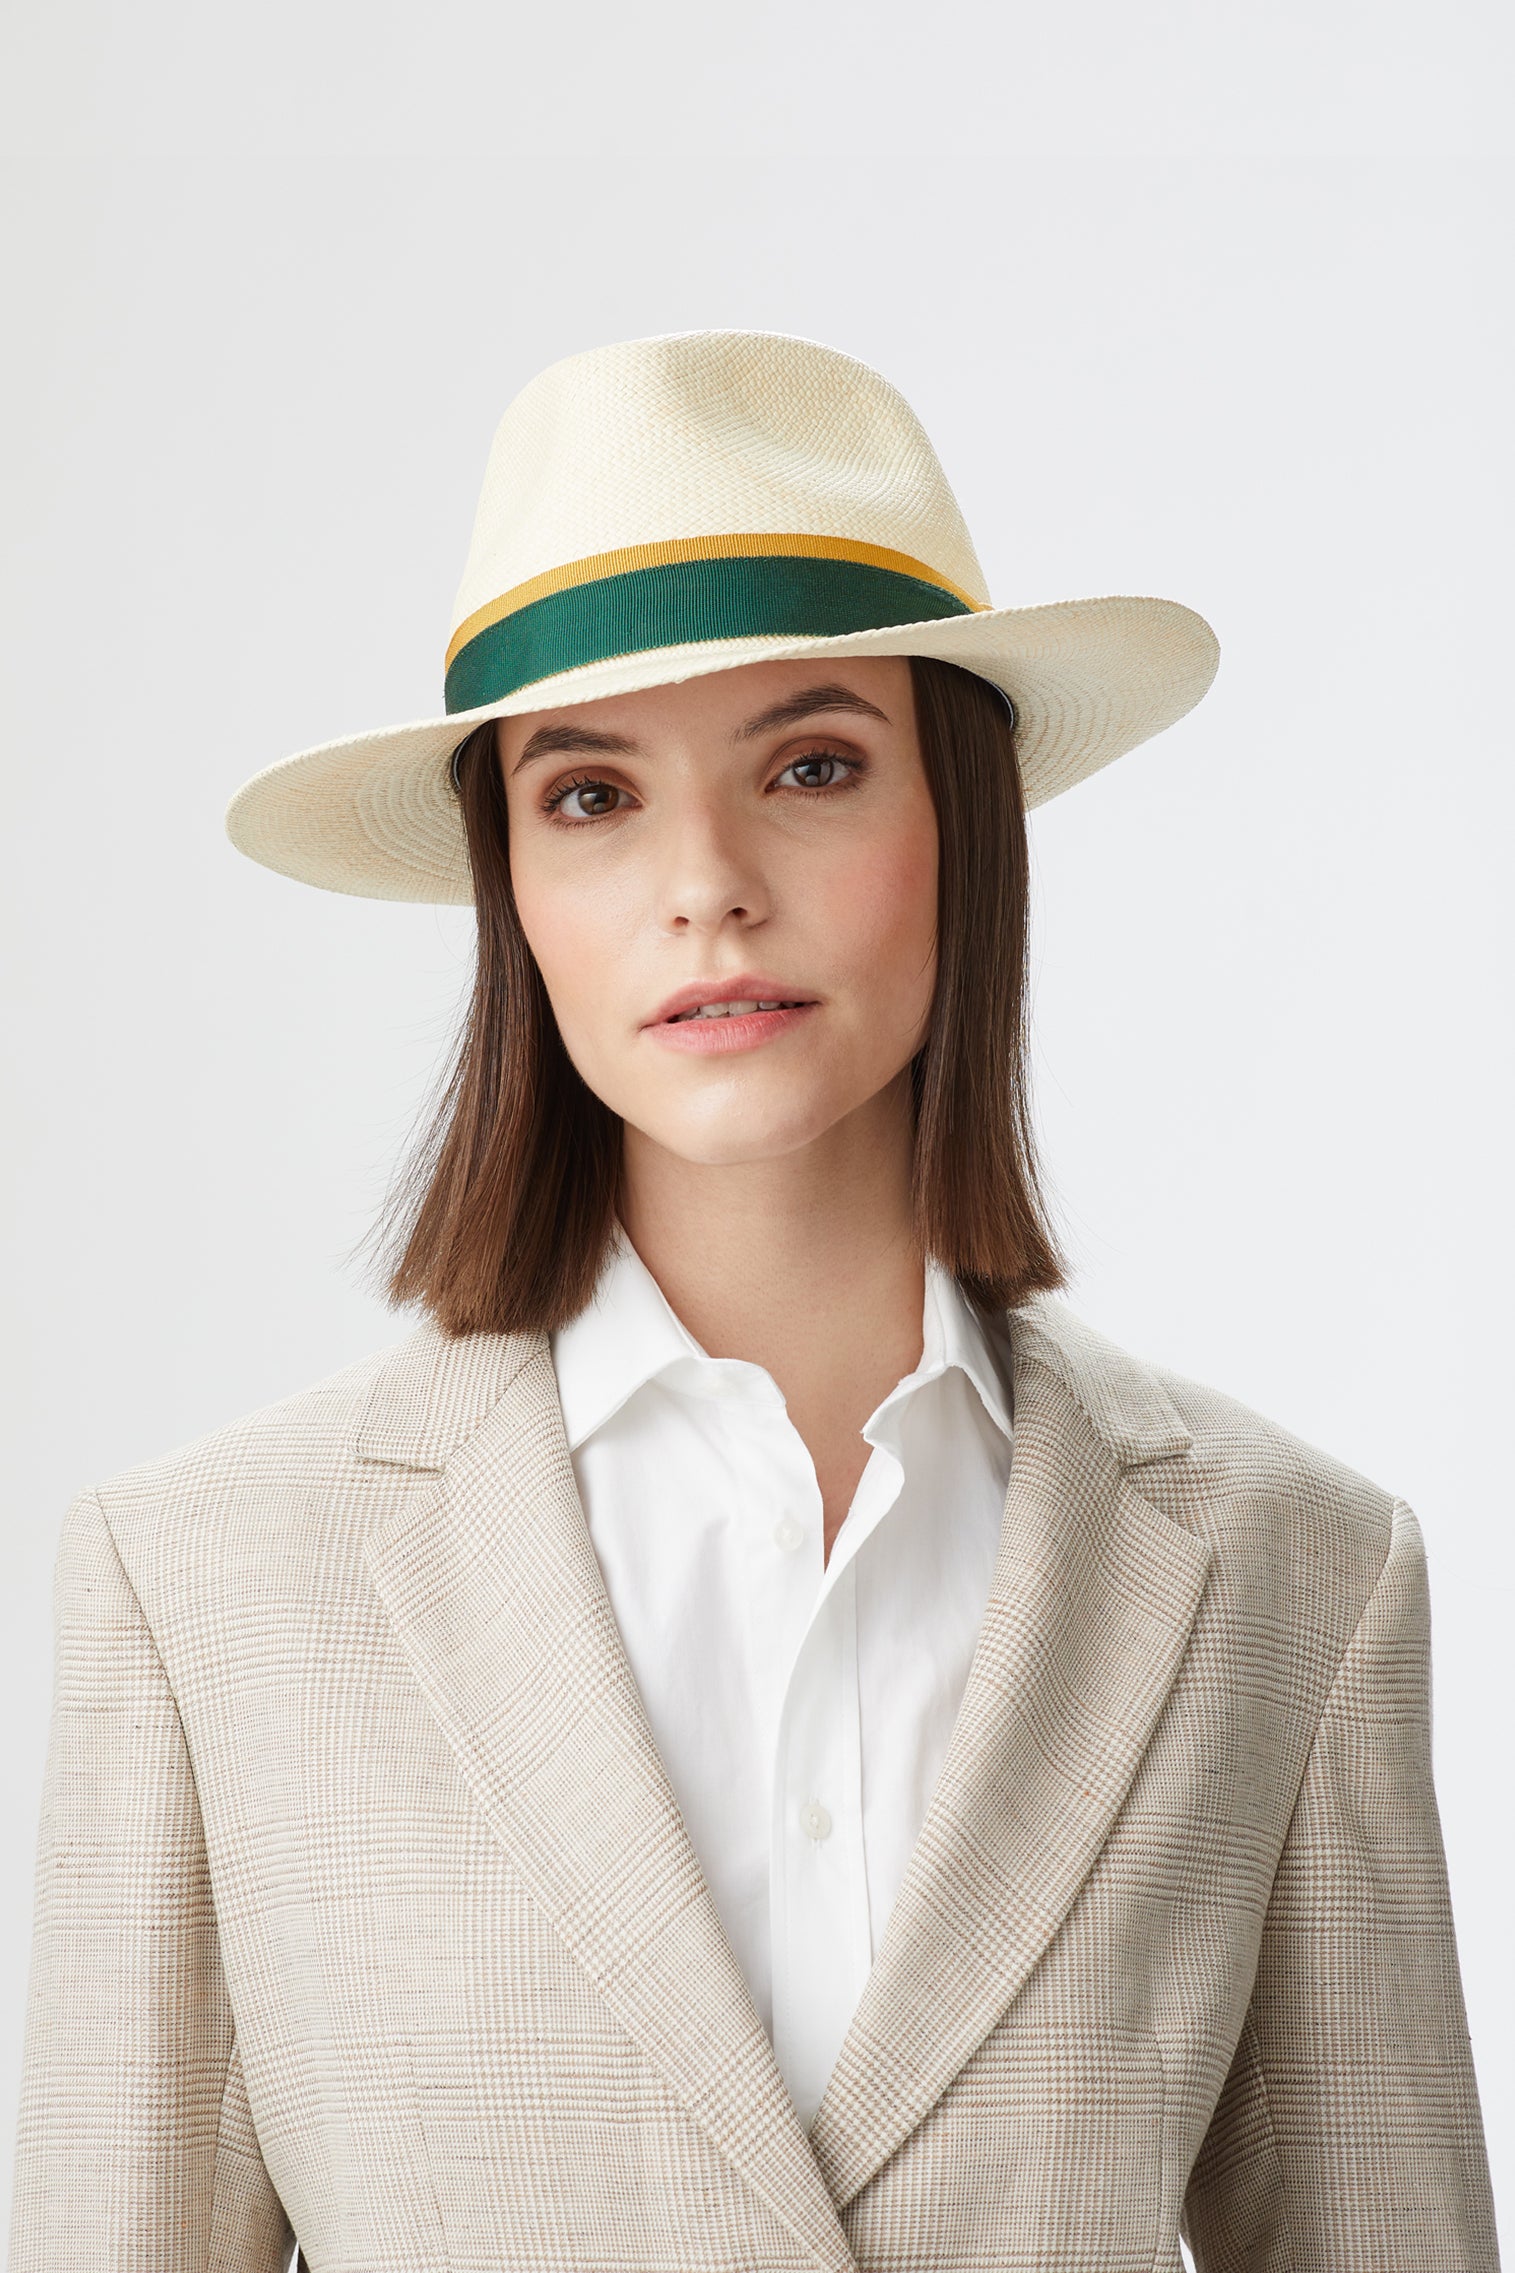 Highgrove Panama - Panama Hats - Lock & Co. Hatters London UK